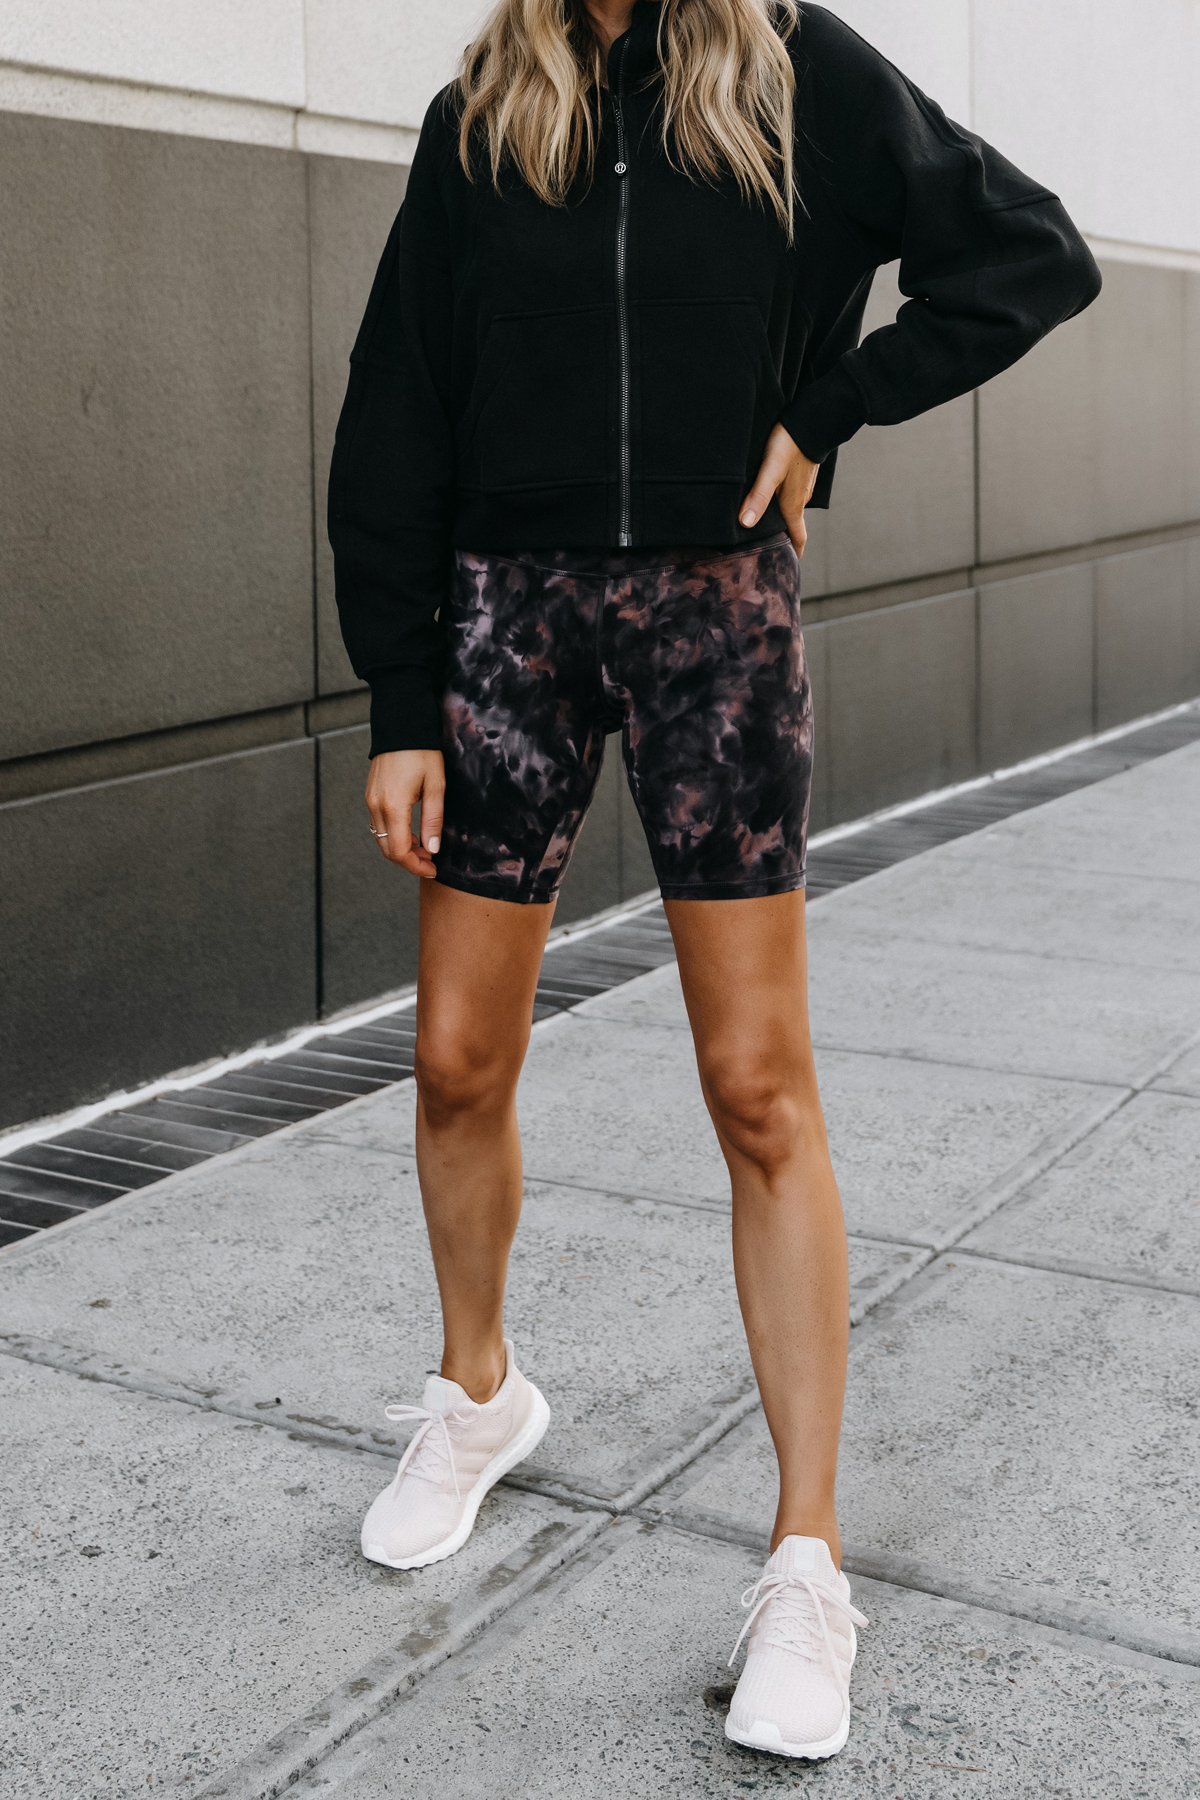 Fashion Jackson Wearing lululemon Align Biker Shorts Review Fitness Outfit